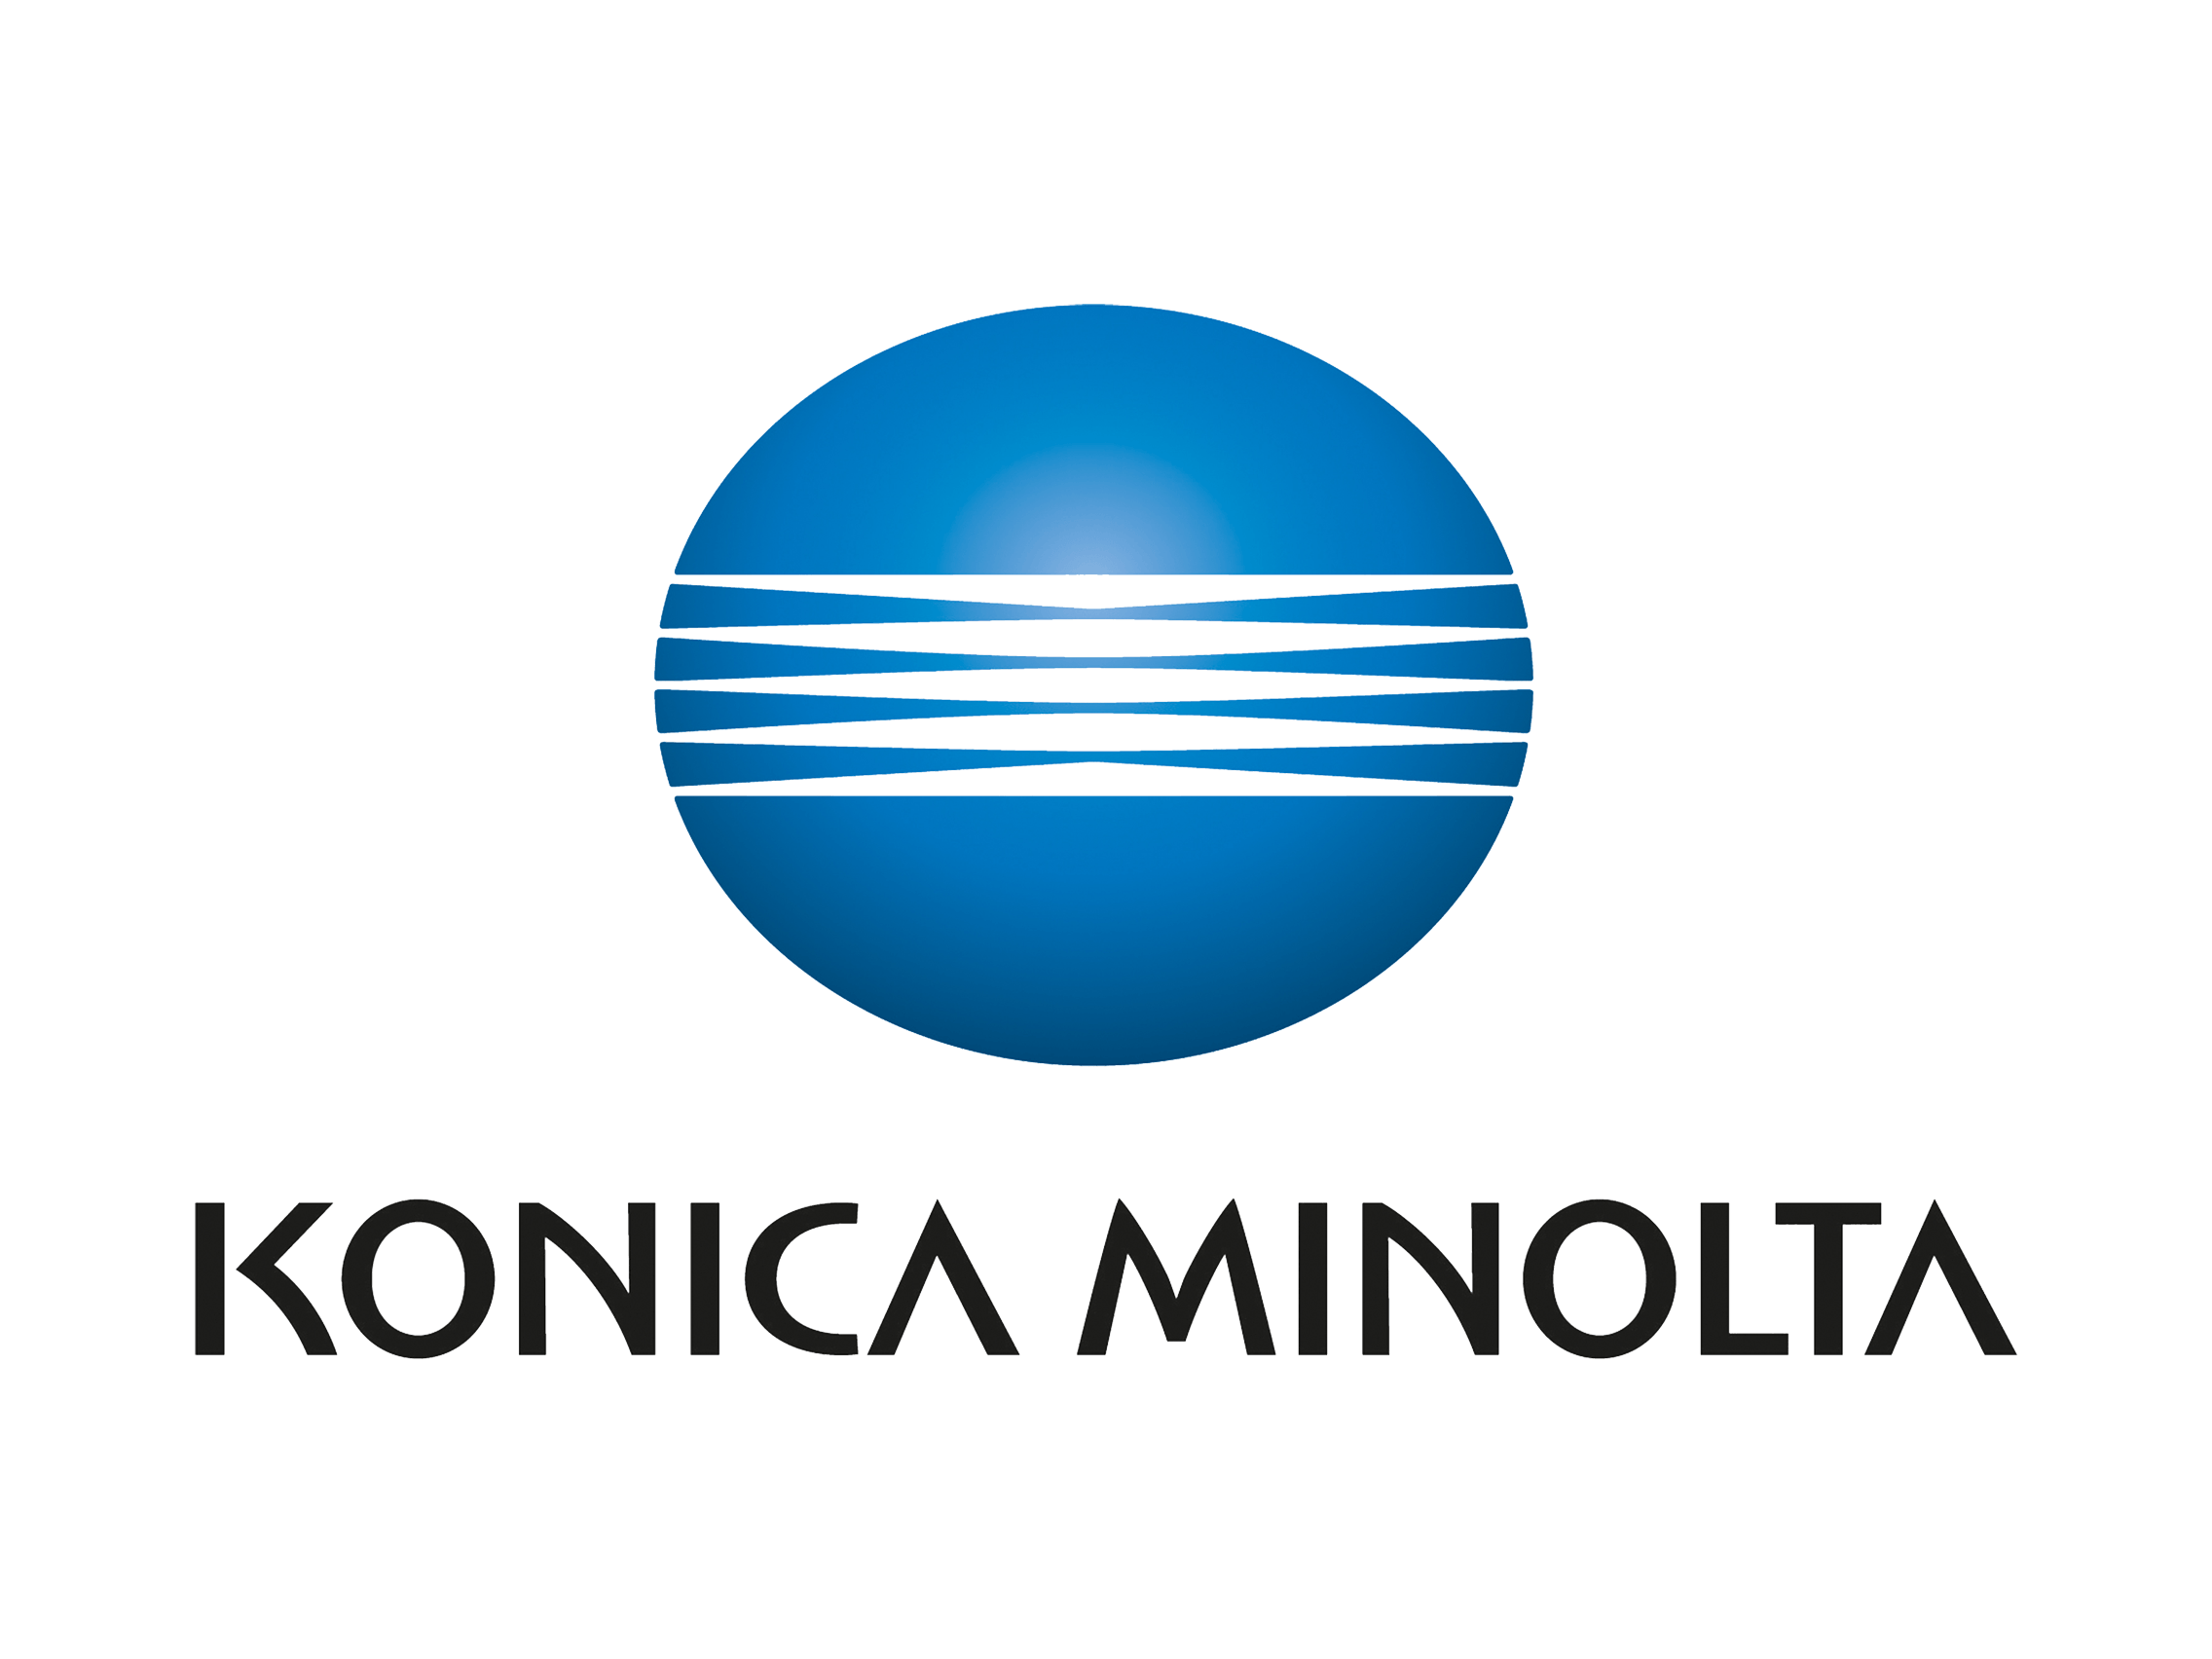 Konica Minolta Logo - Konica Minolta Logo And Wordmark. BAYtek Office Solutions